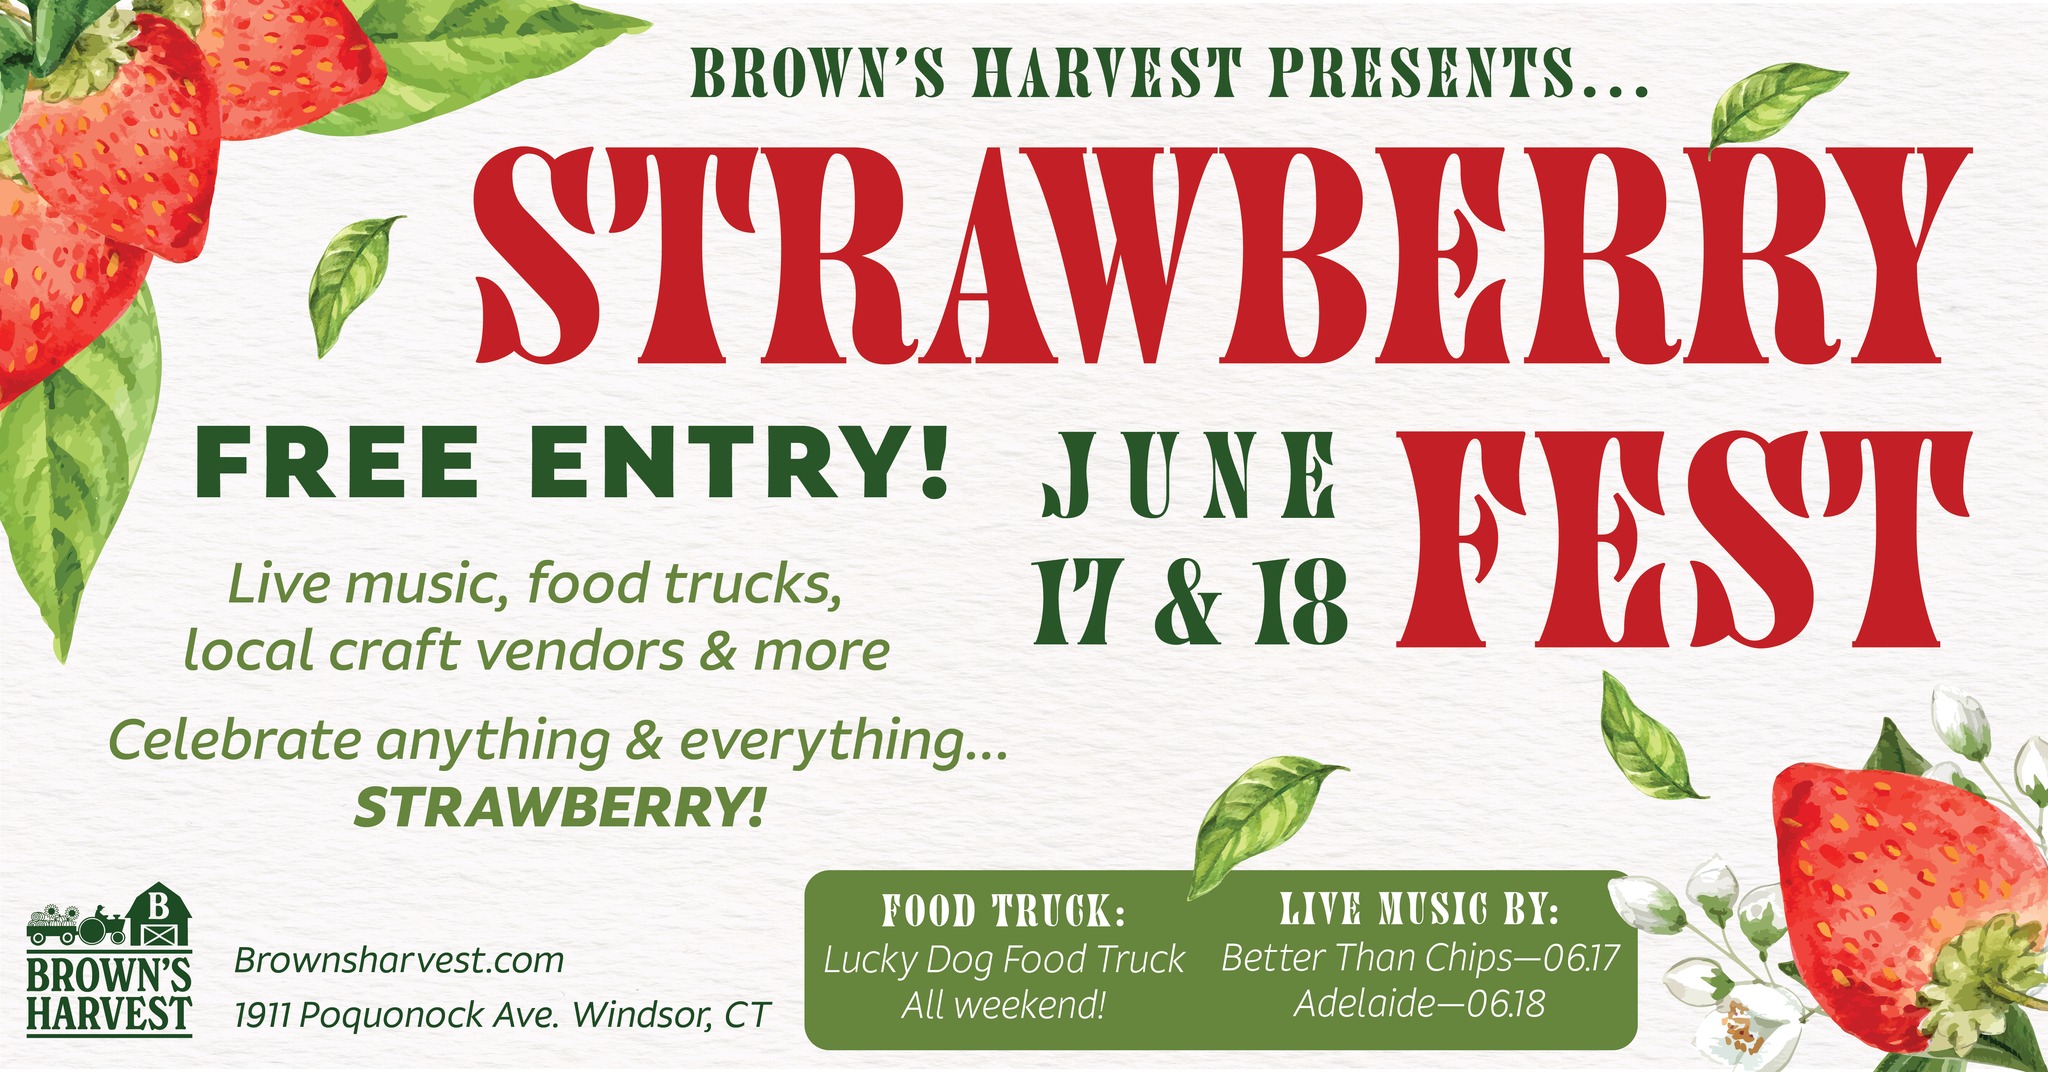 Strawberry Festival at Brown's Harvest in Windsor